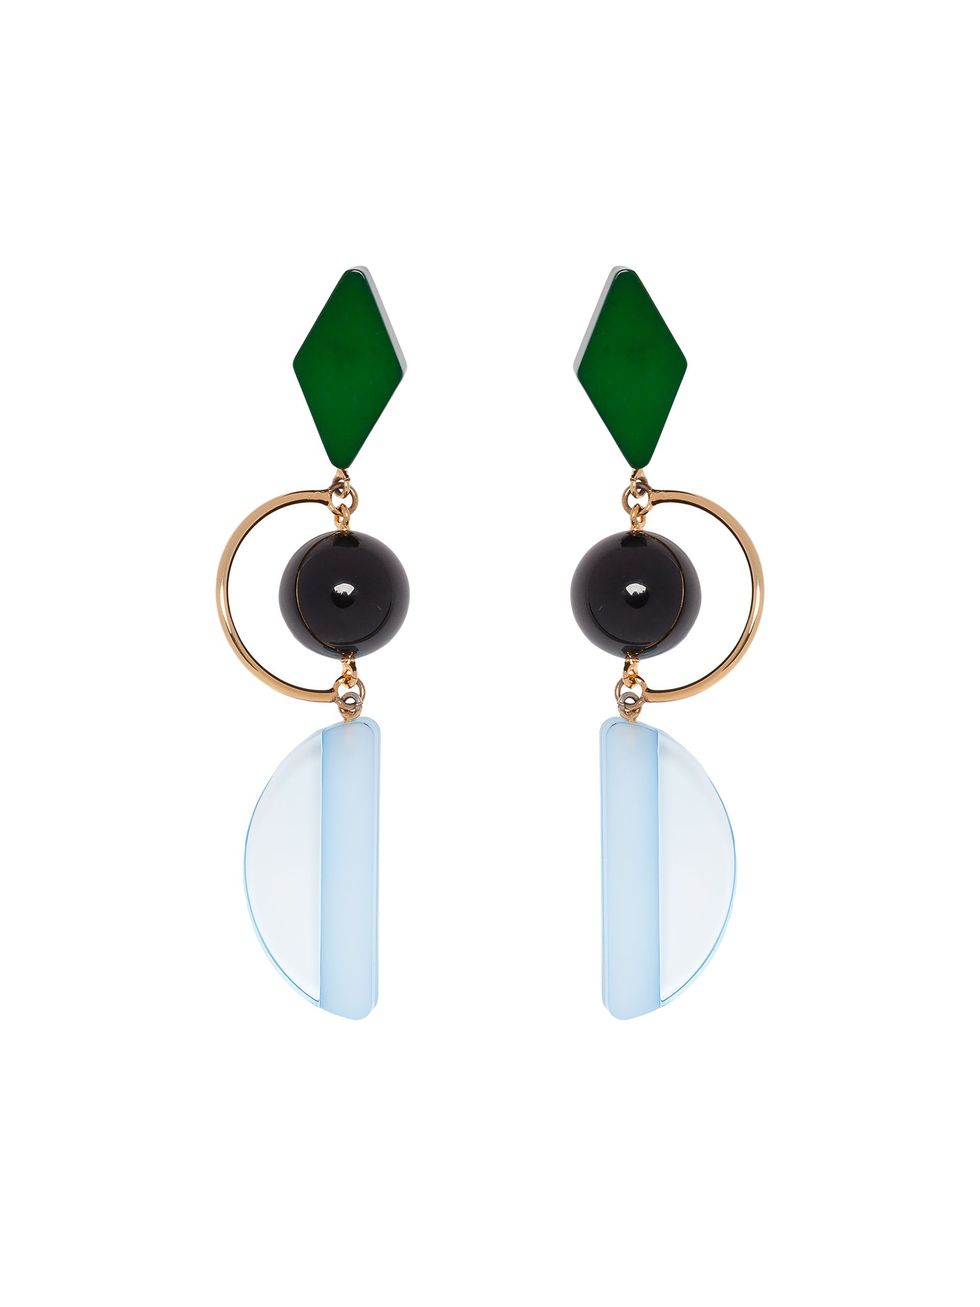 Earrings, Jewellery, Fashion accessory, Green, Emerald, Gemstone, Onyx, Jade, Turquoise, Circle, 